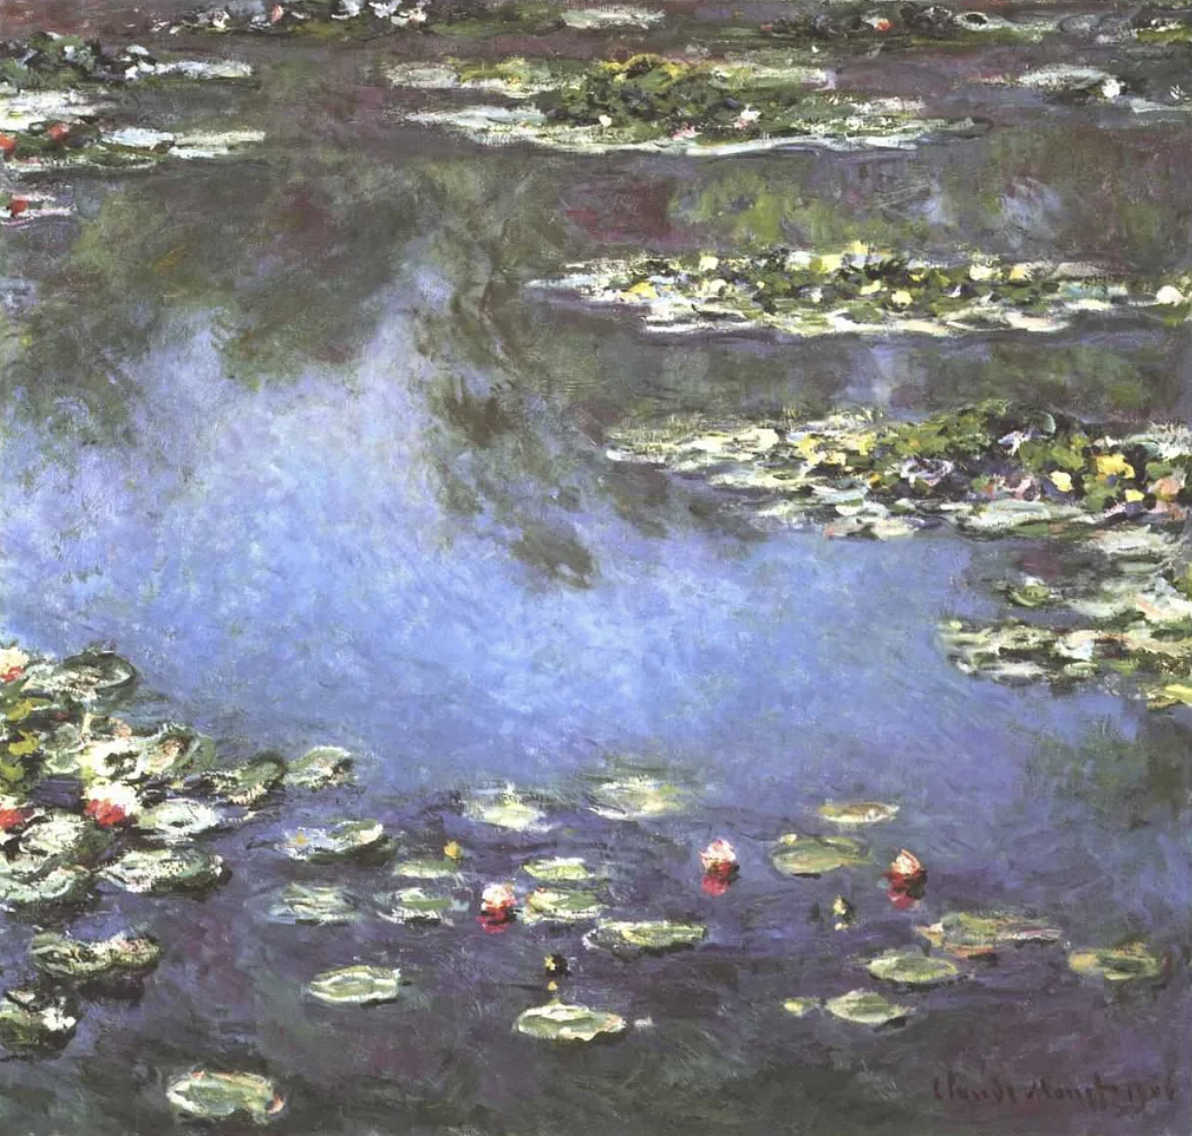 Claude Monet, "Water Lilies" 1906